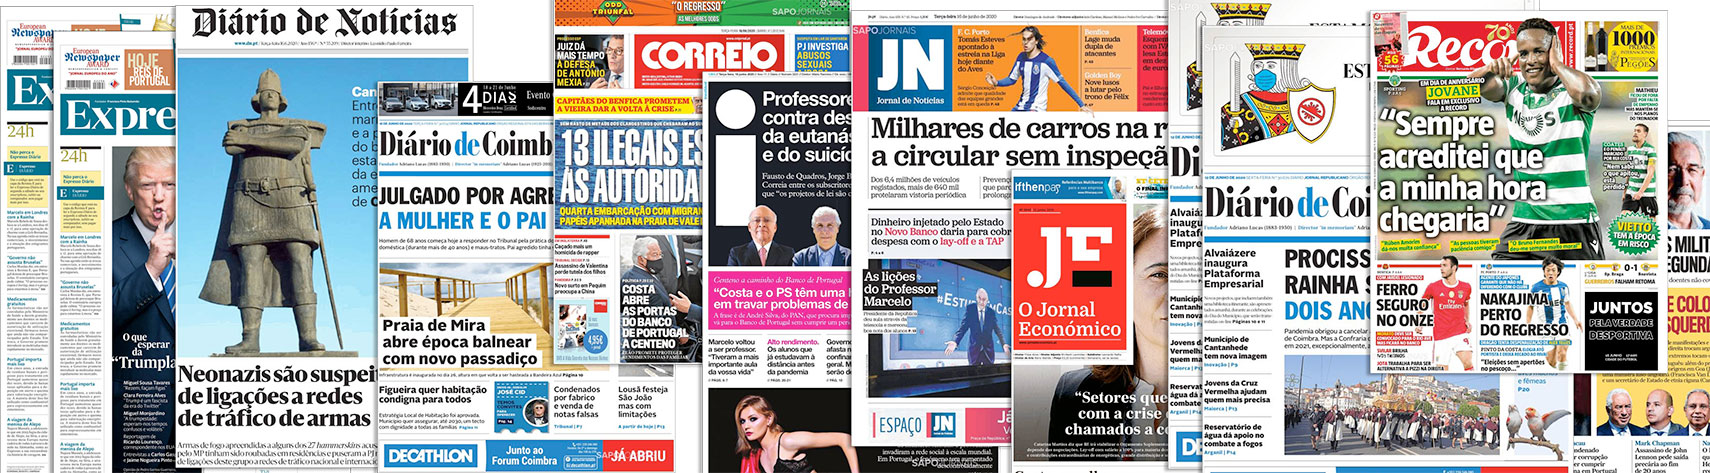 Portuguese newspaper cover